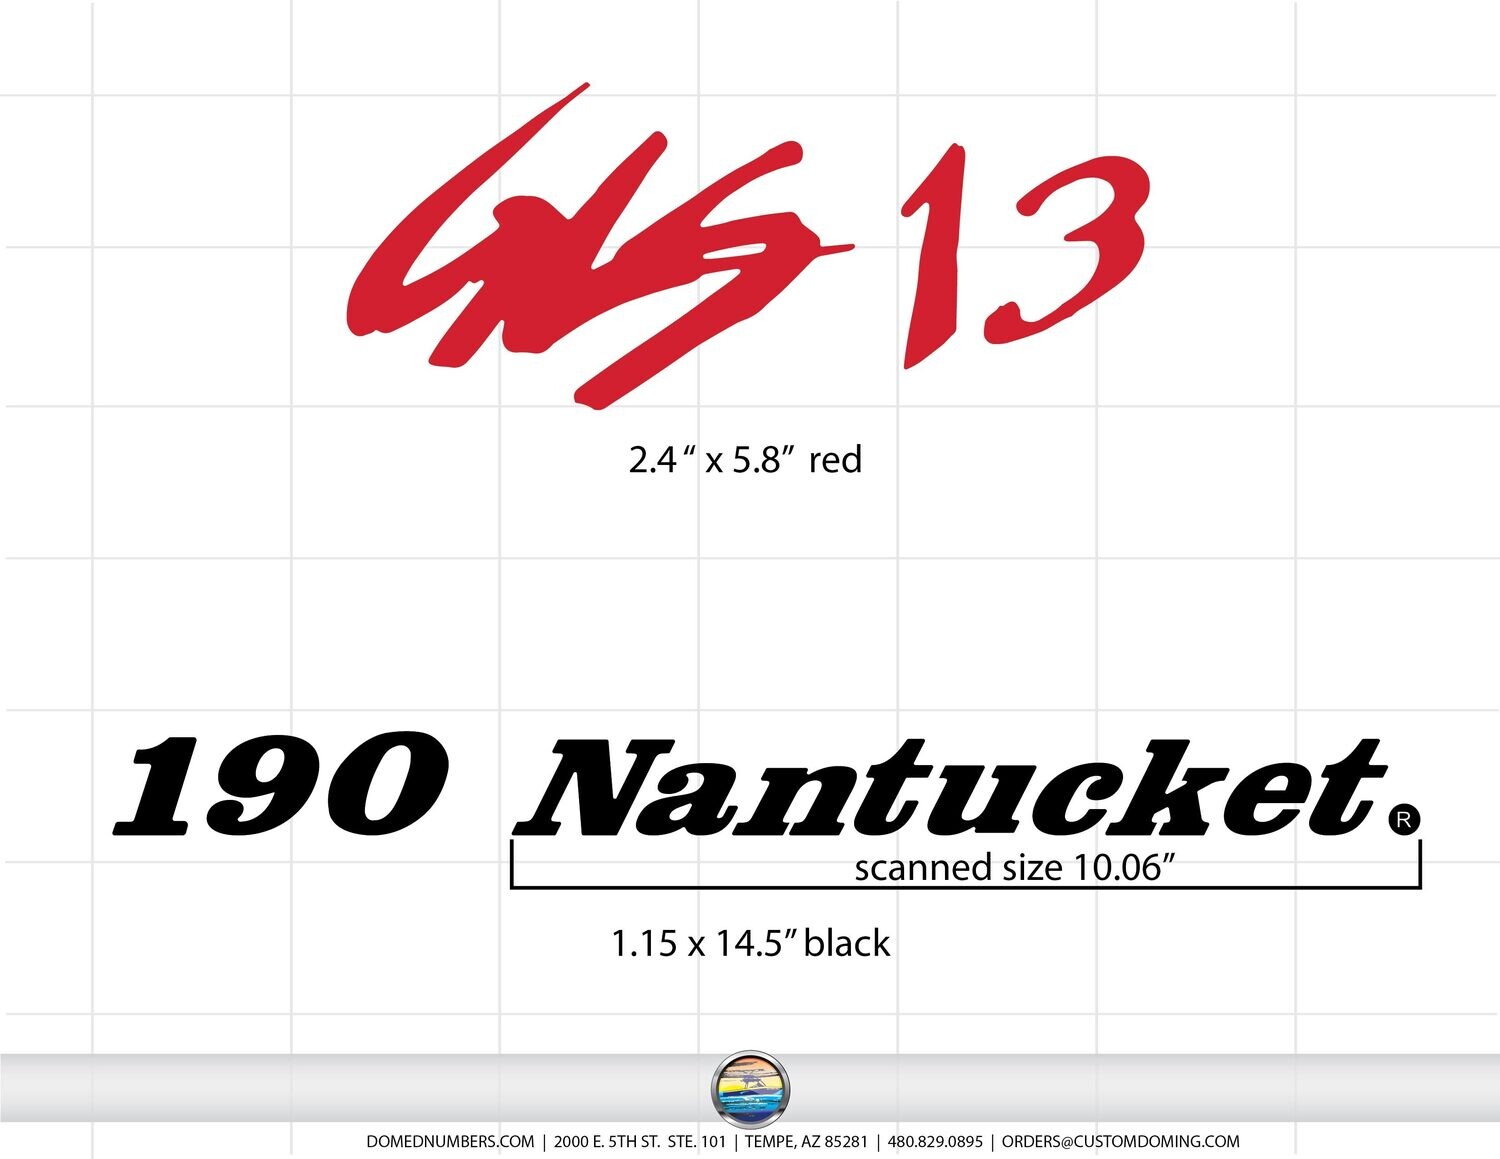 Boston Whaler GLS 13 and 190 Nantucket